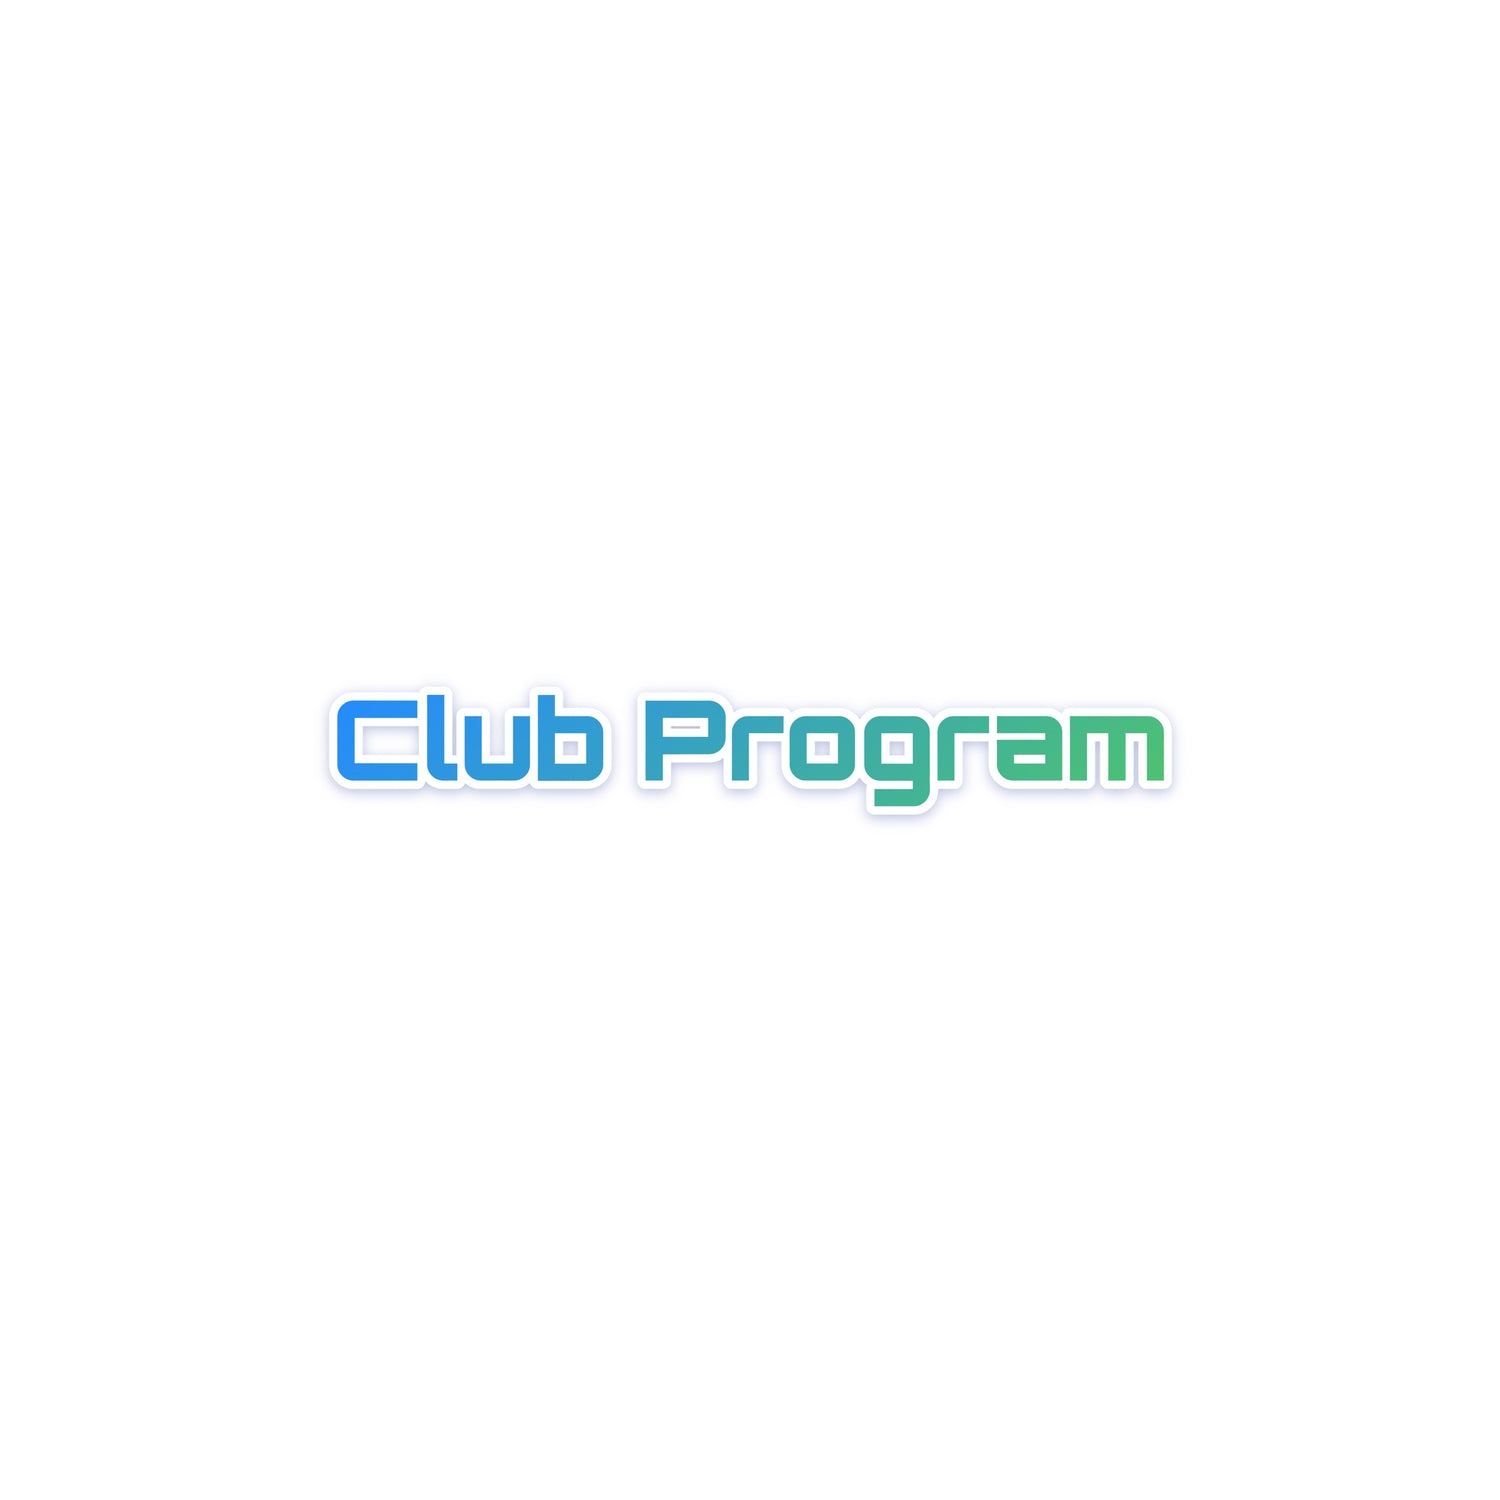 Club Program